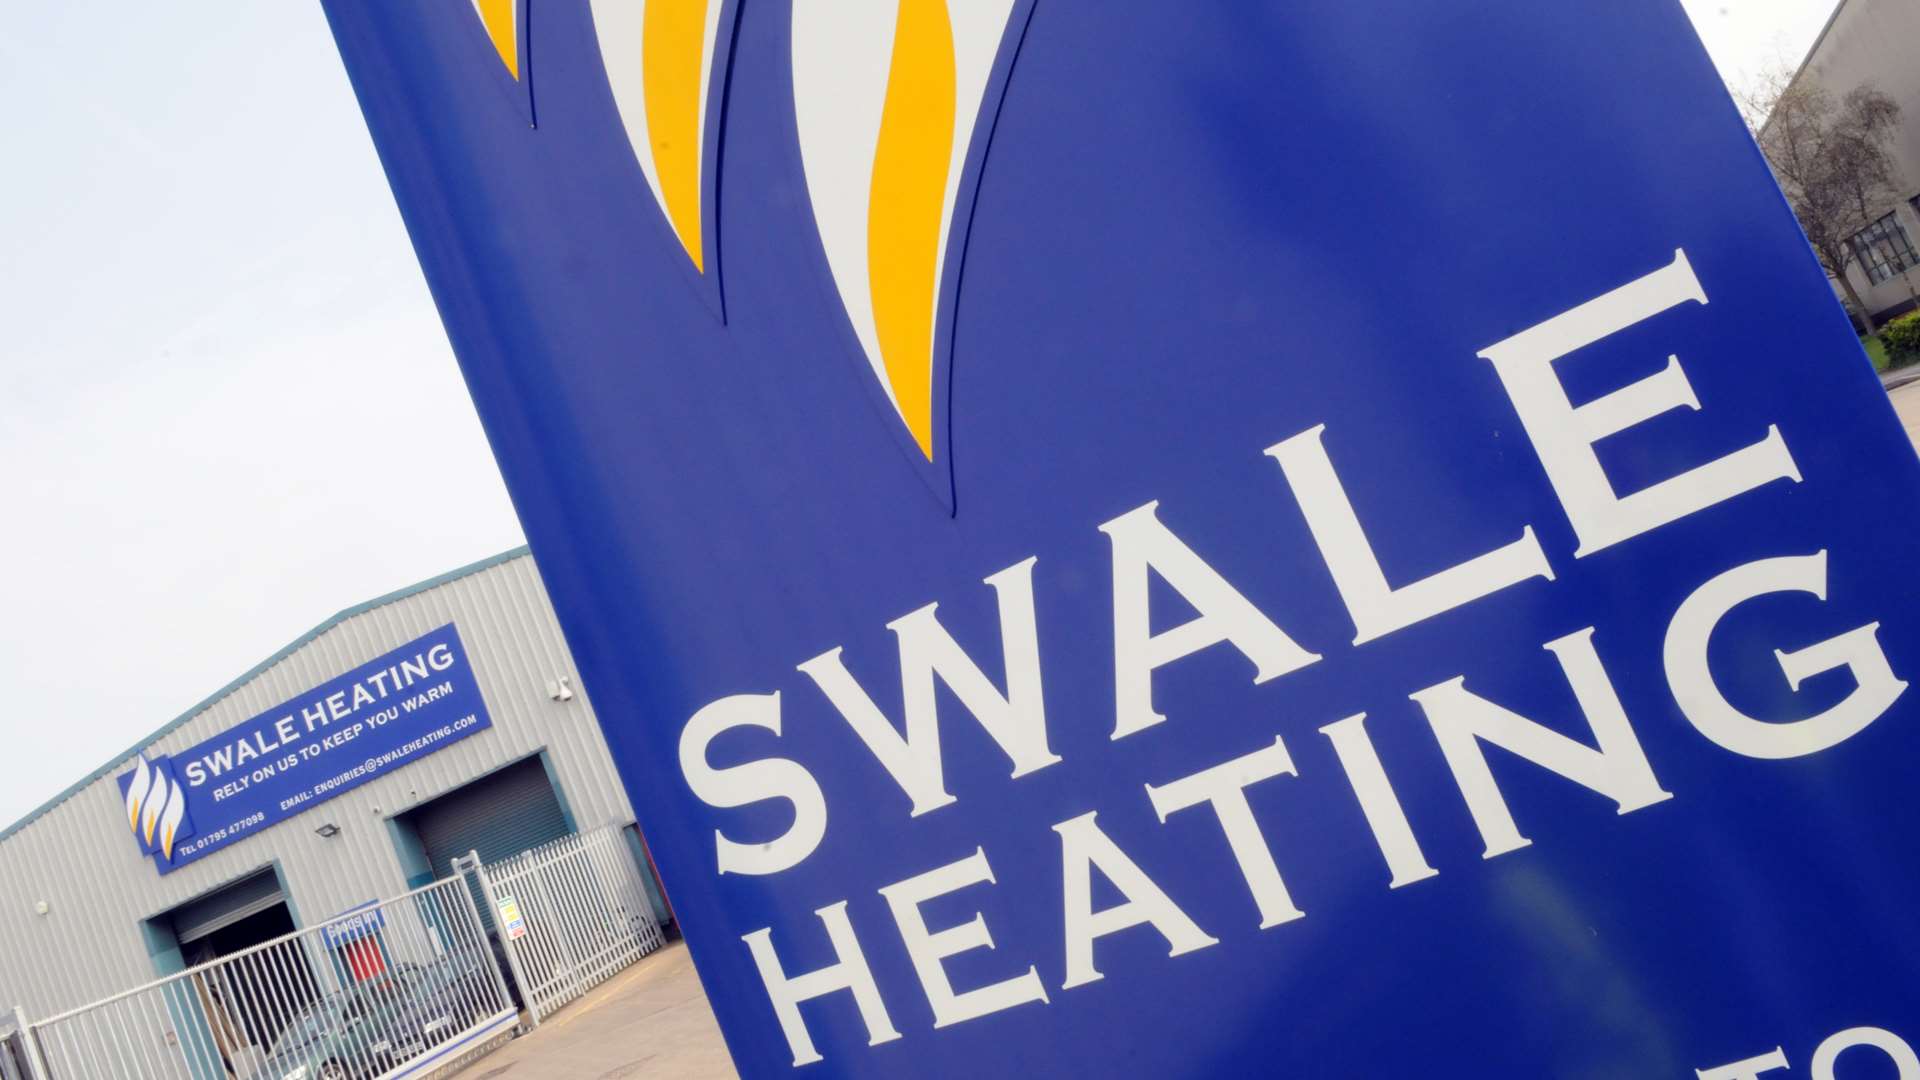 Swale Heating's headquarters in Sittingbourne